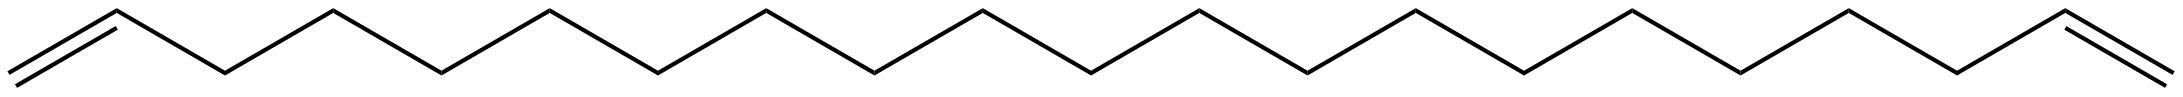 Image of 1,20-heneicosadiene